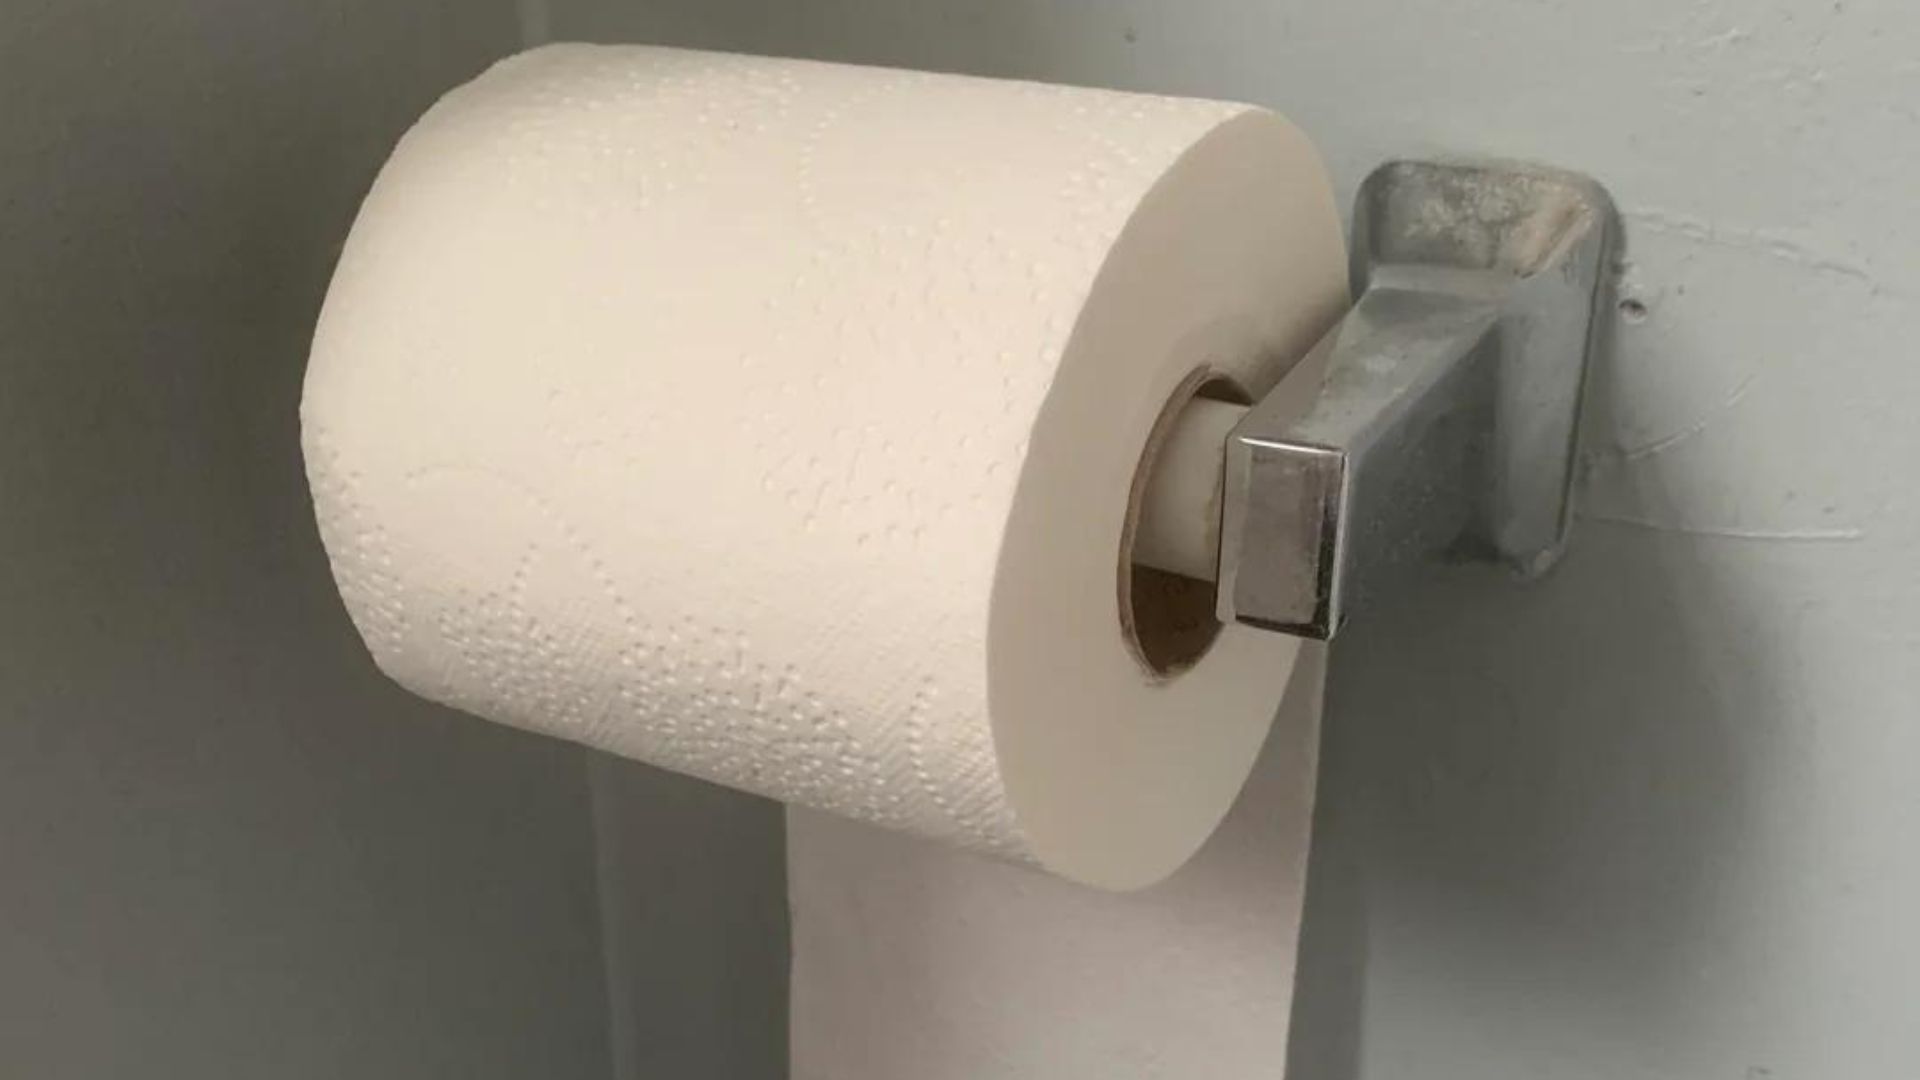 Reddit Post Reveals Roommate’s Excessive Toilet Paper Use Sparks Social Media Debate